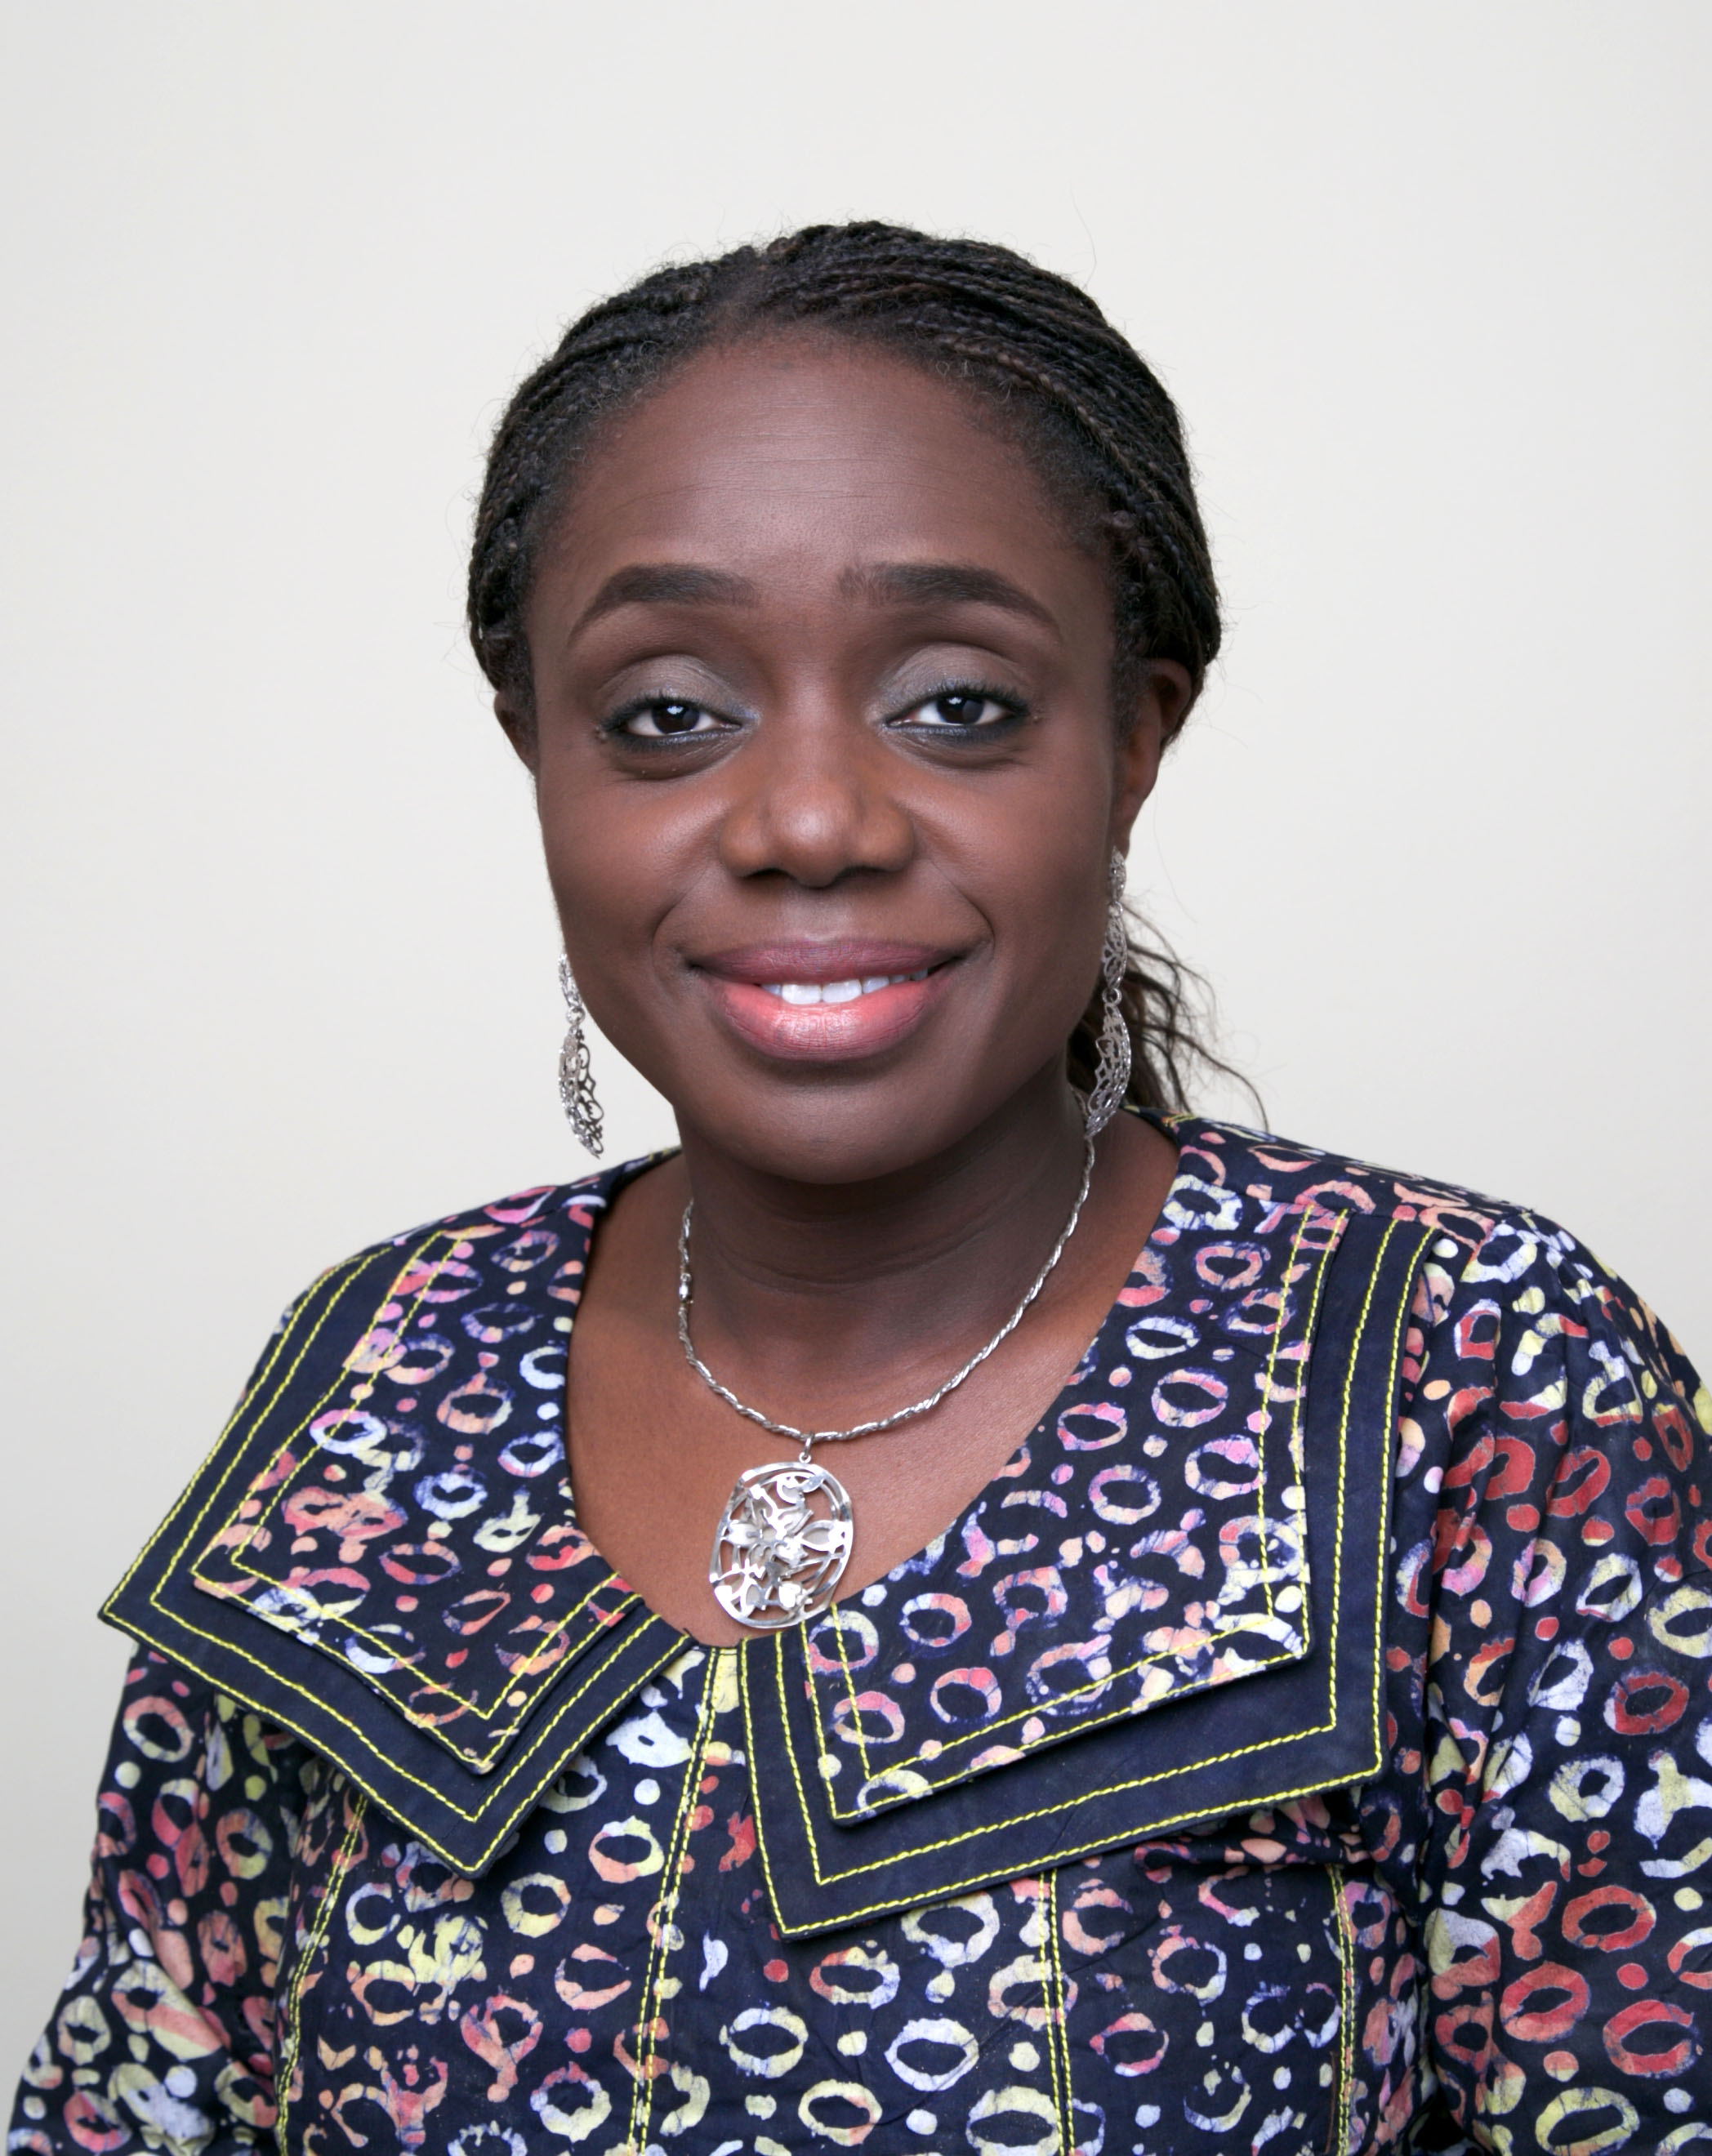 Adeosun: Nigeria’s Economic Team Working Hard to Revamp Economy